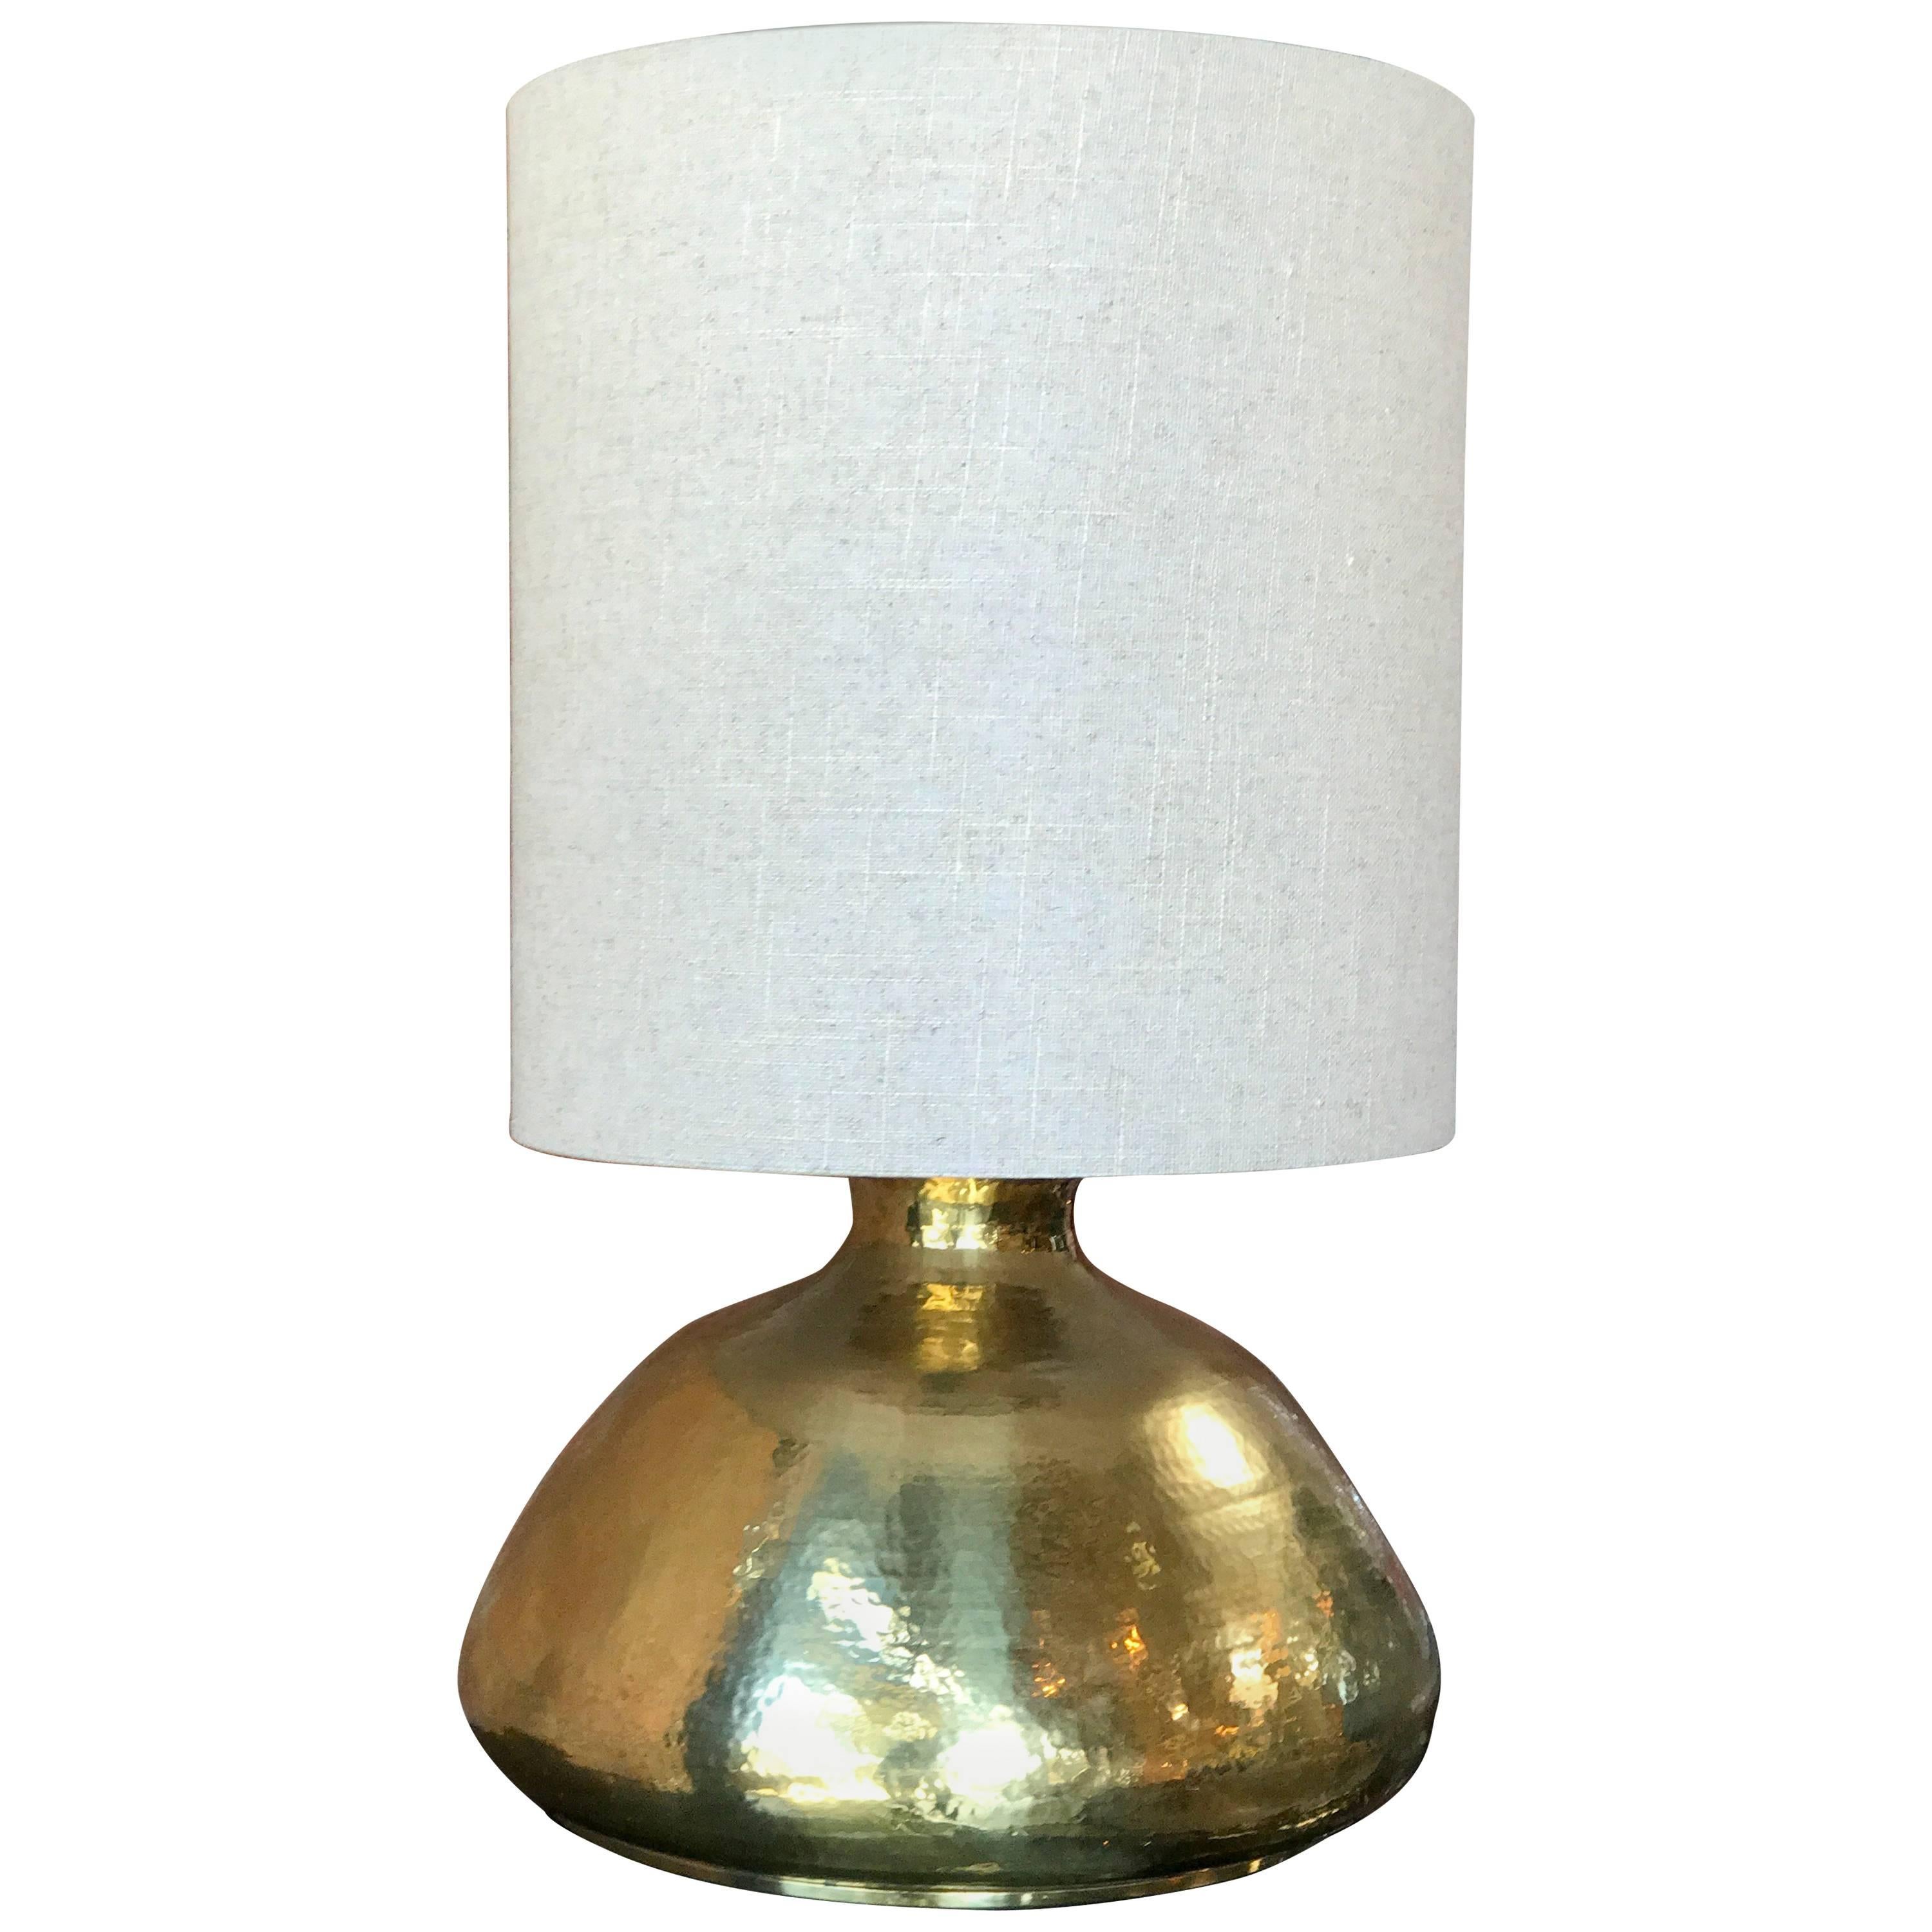 Italian Hammered Brass Table Lamp